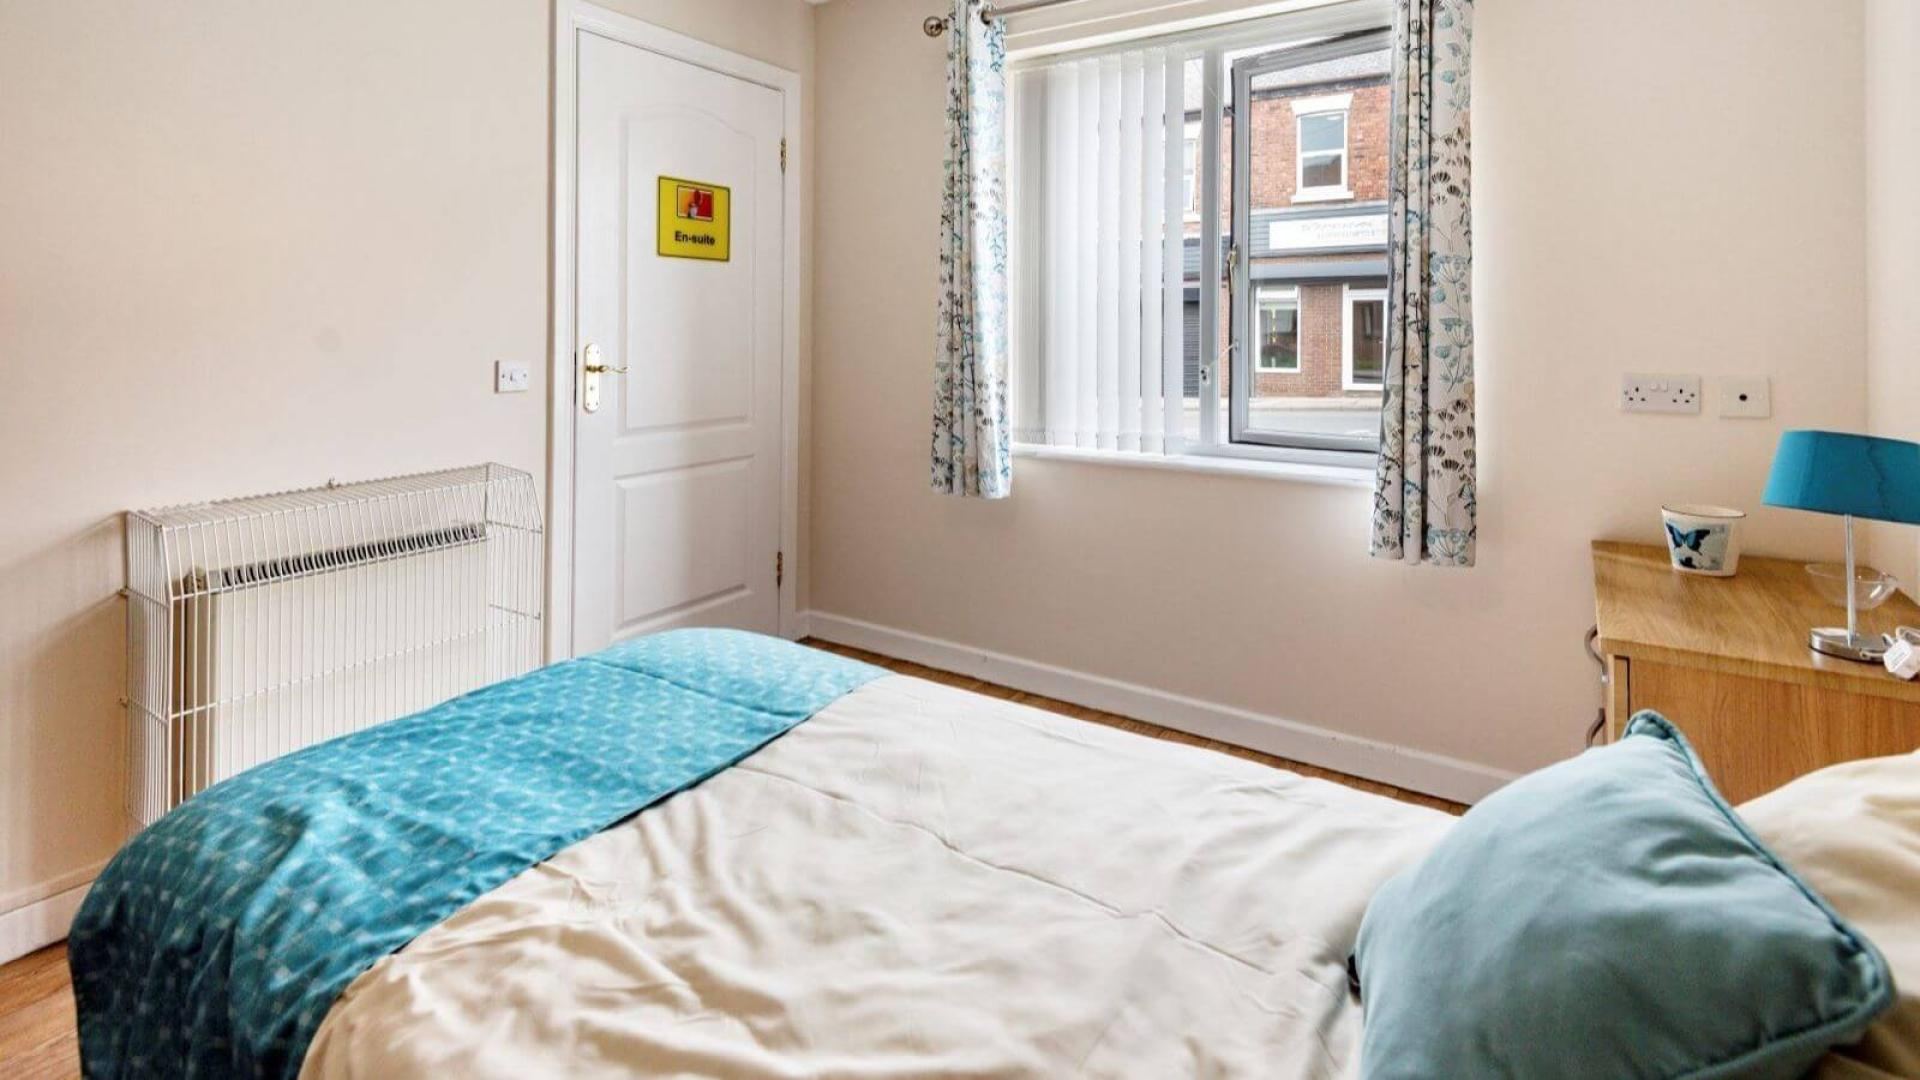 Bedroom at Ashlea Lodge Care Home in Sunderland 